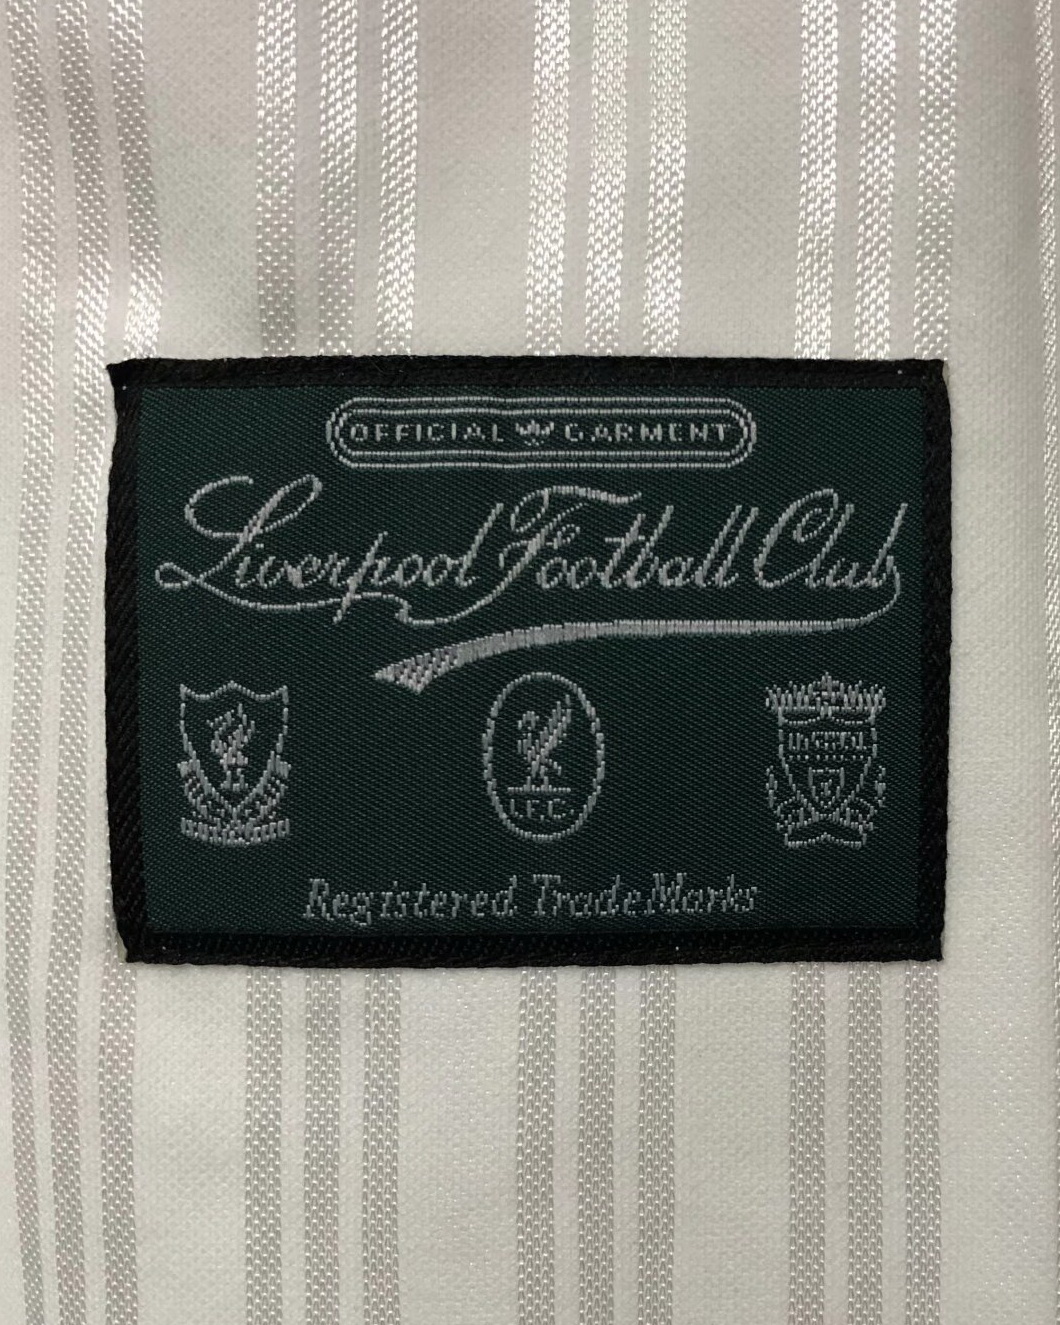 Liverpool 1995/96 Away Soccer Jersey